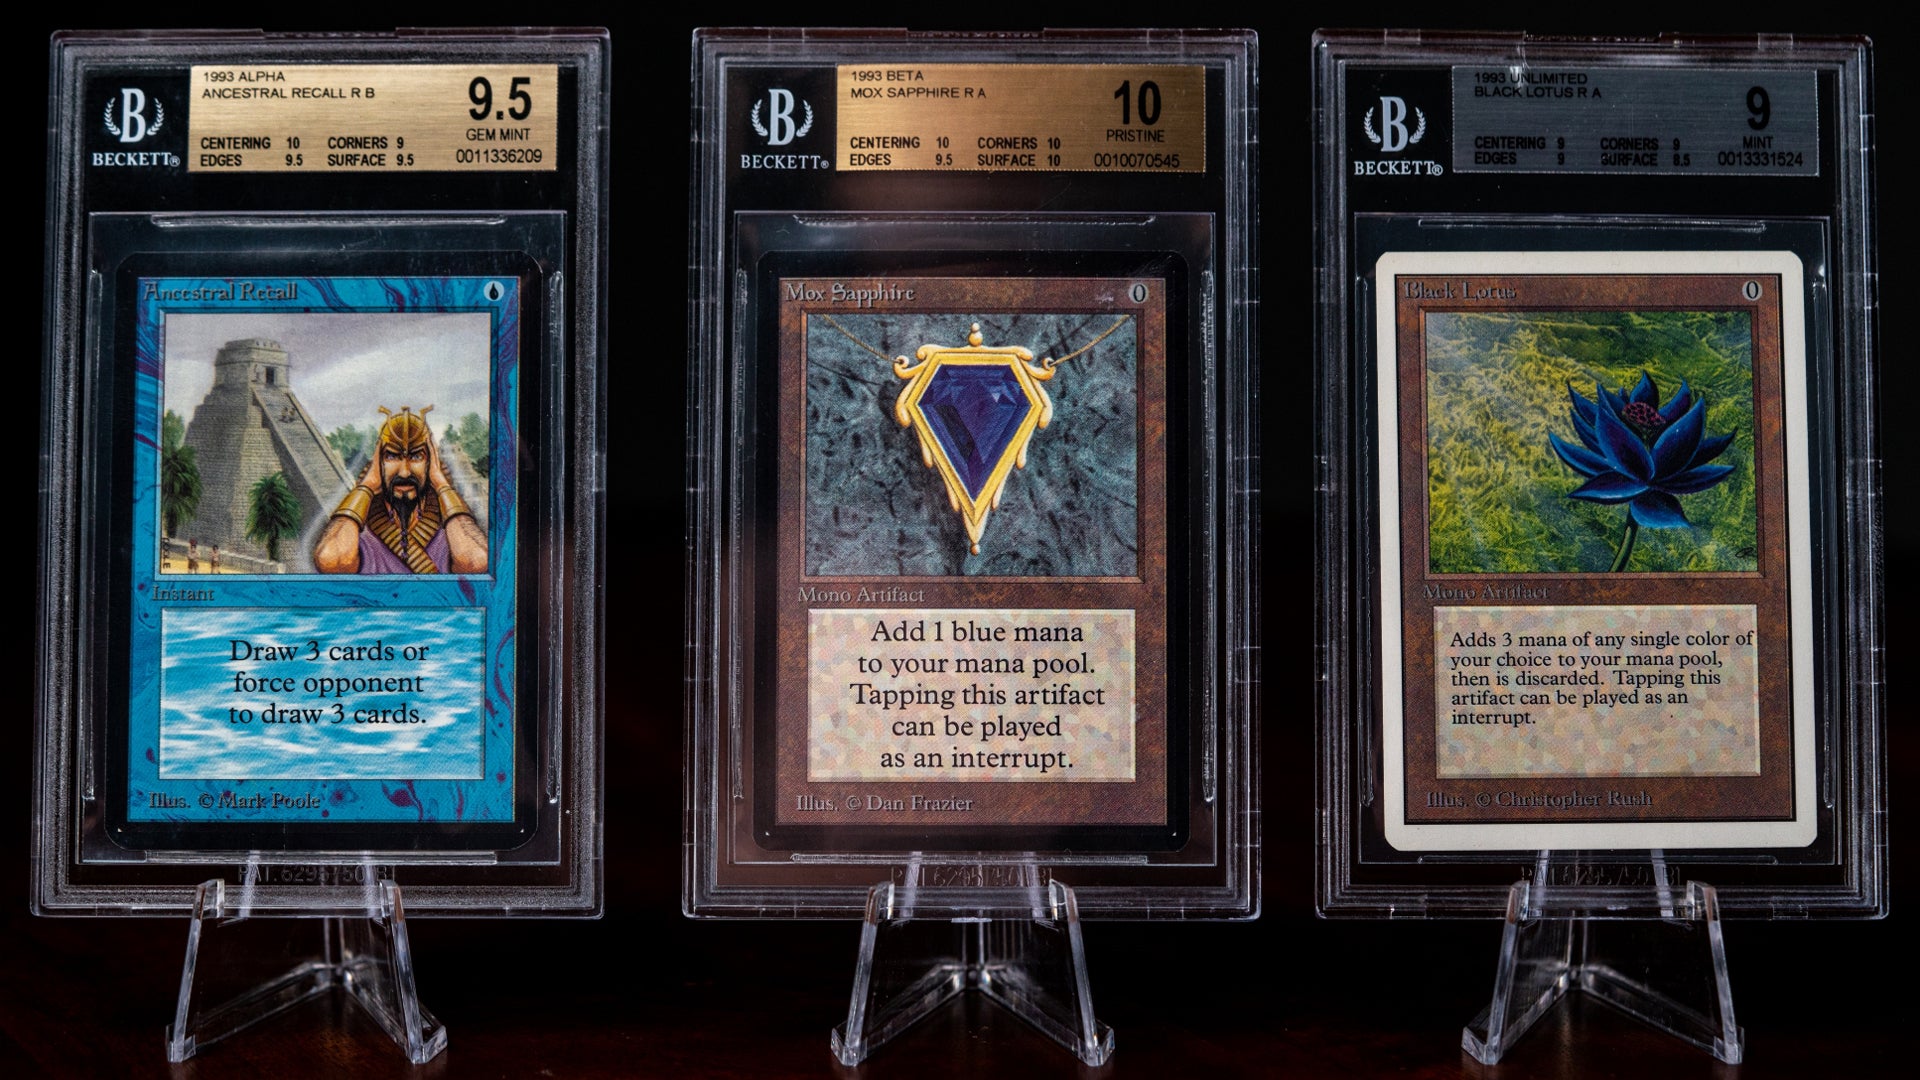 Magic: The Gathering's legendary Power Nine cards, including Black